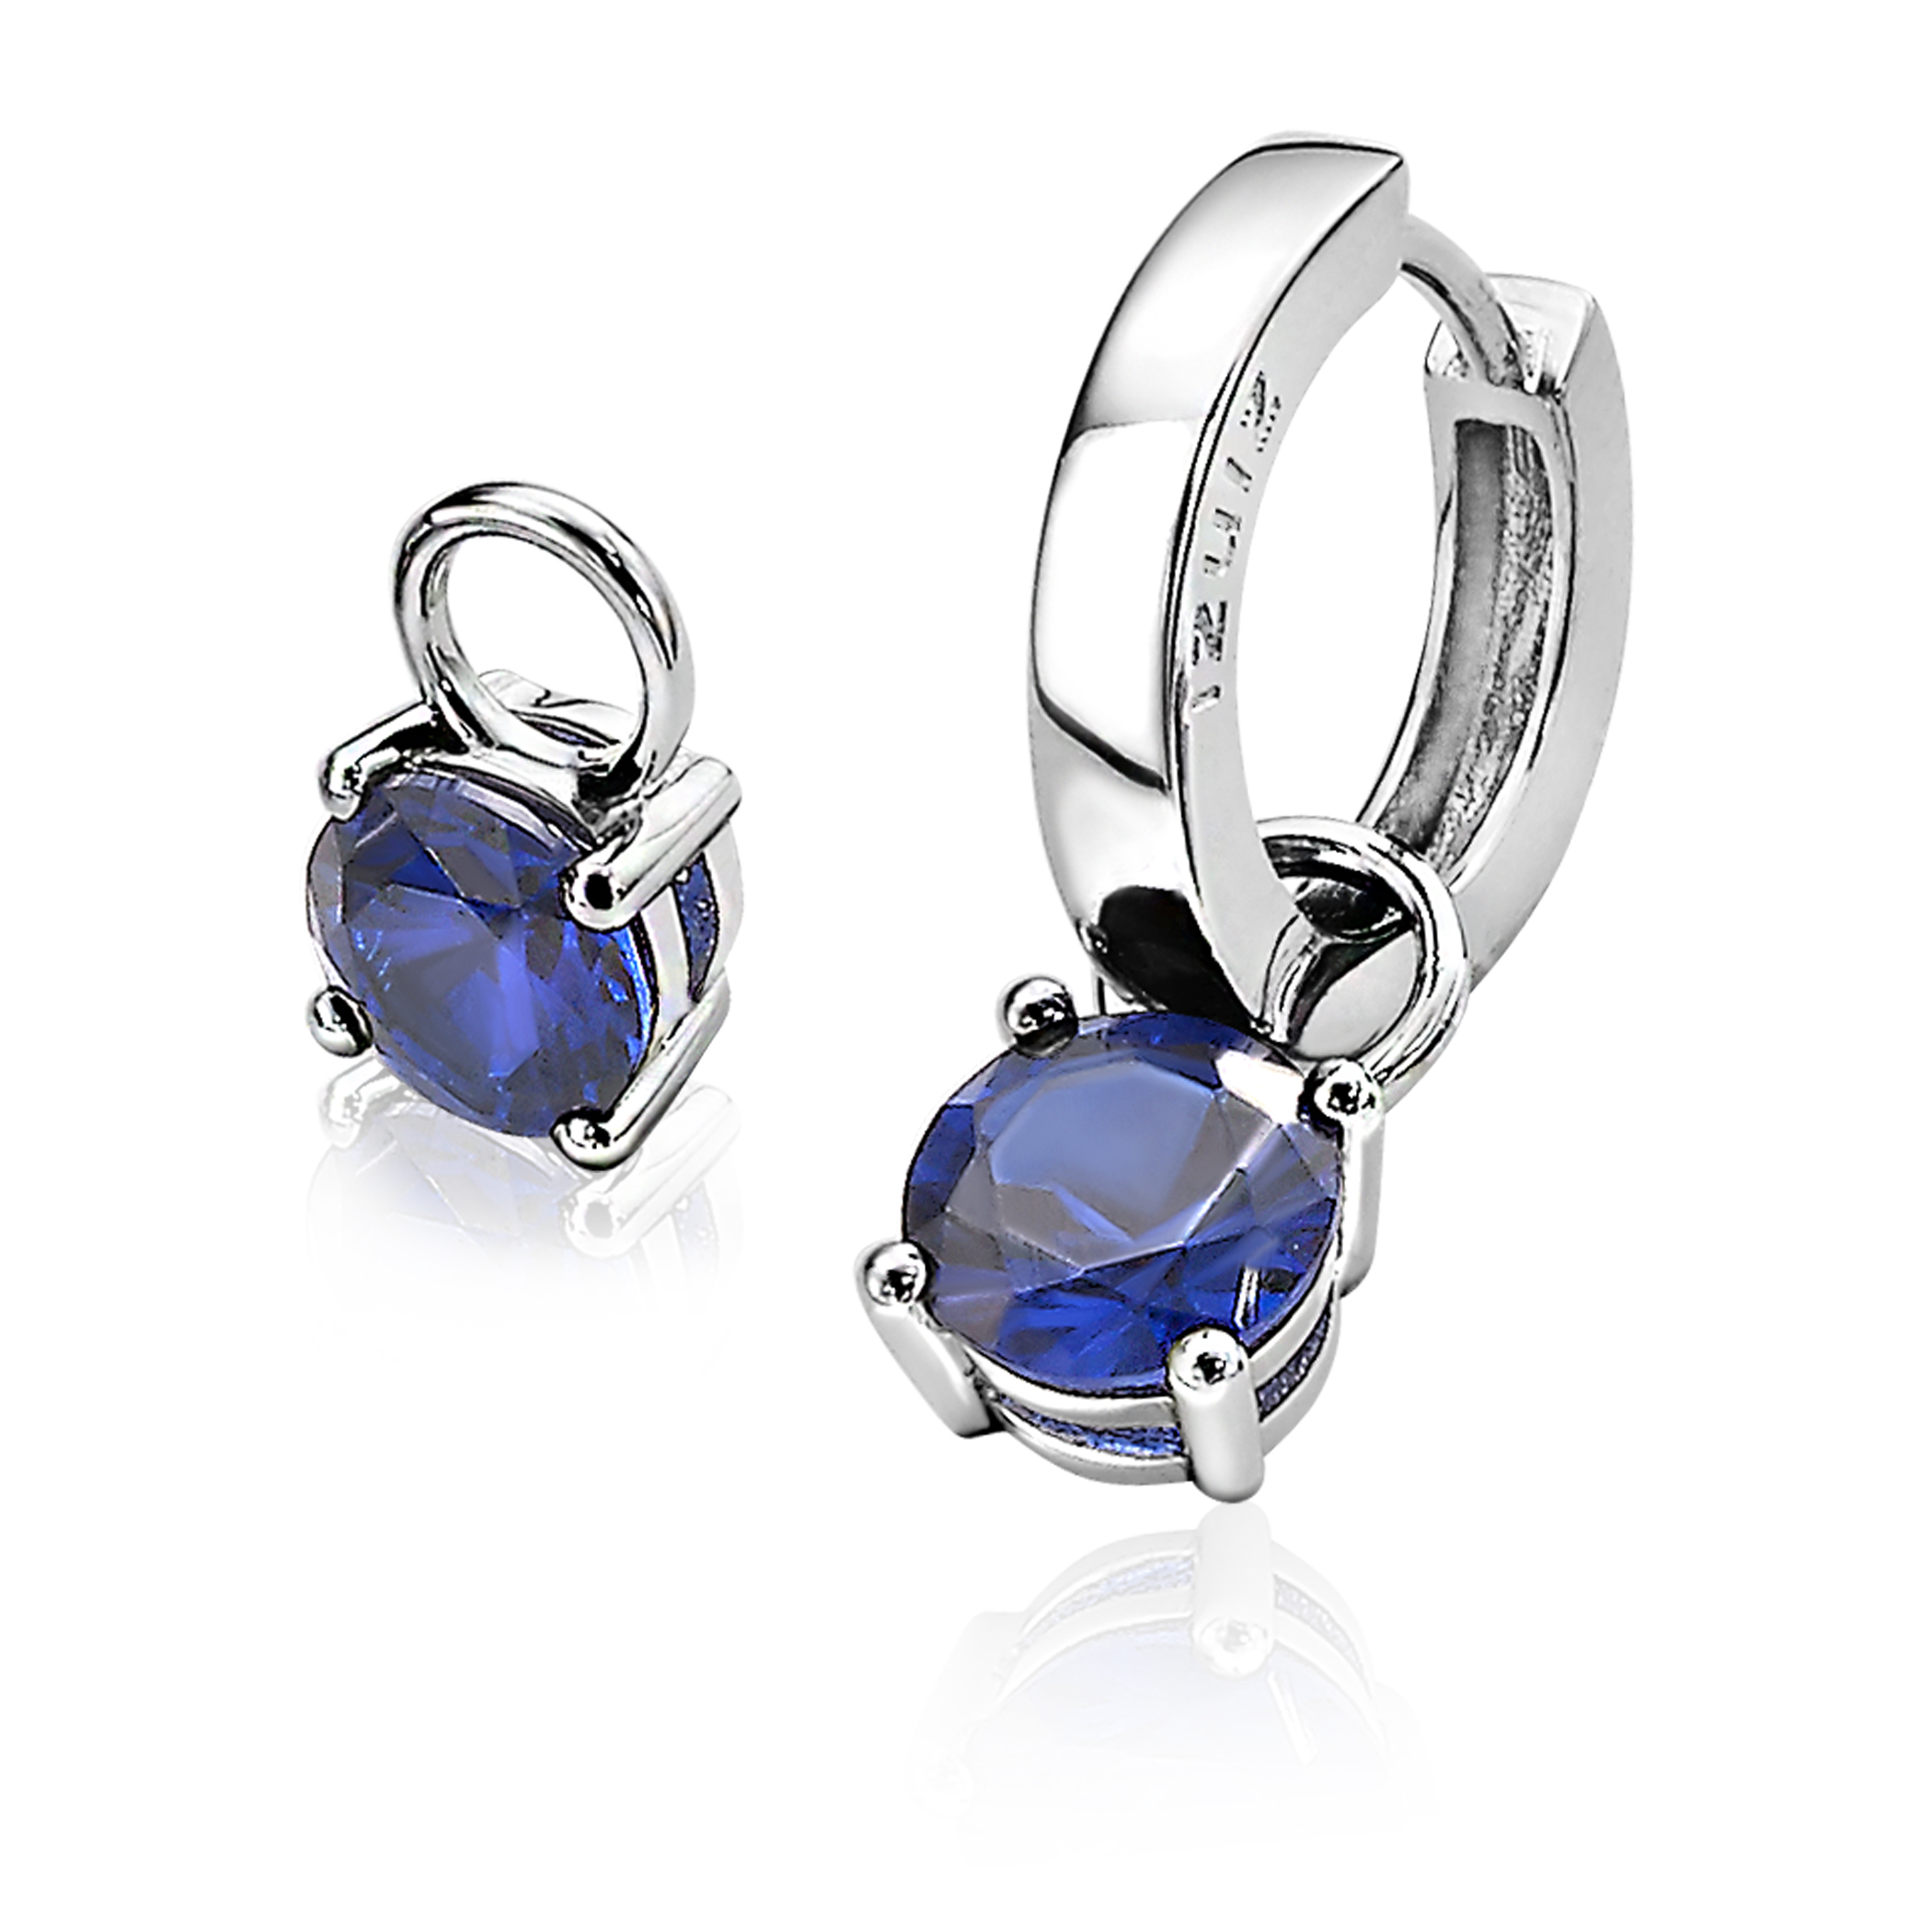 ZINZI Sterling Silver Earrings Pendants Round Dark Blue ZICH1300Q (excl. hoop earrings)